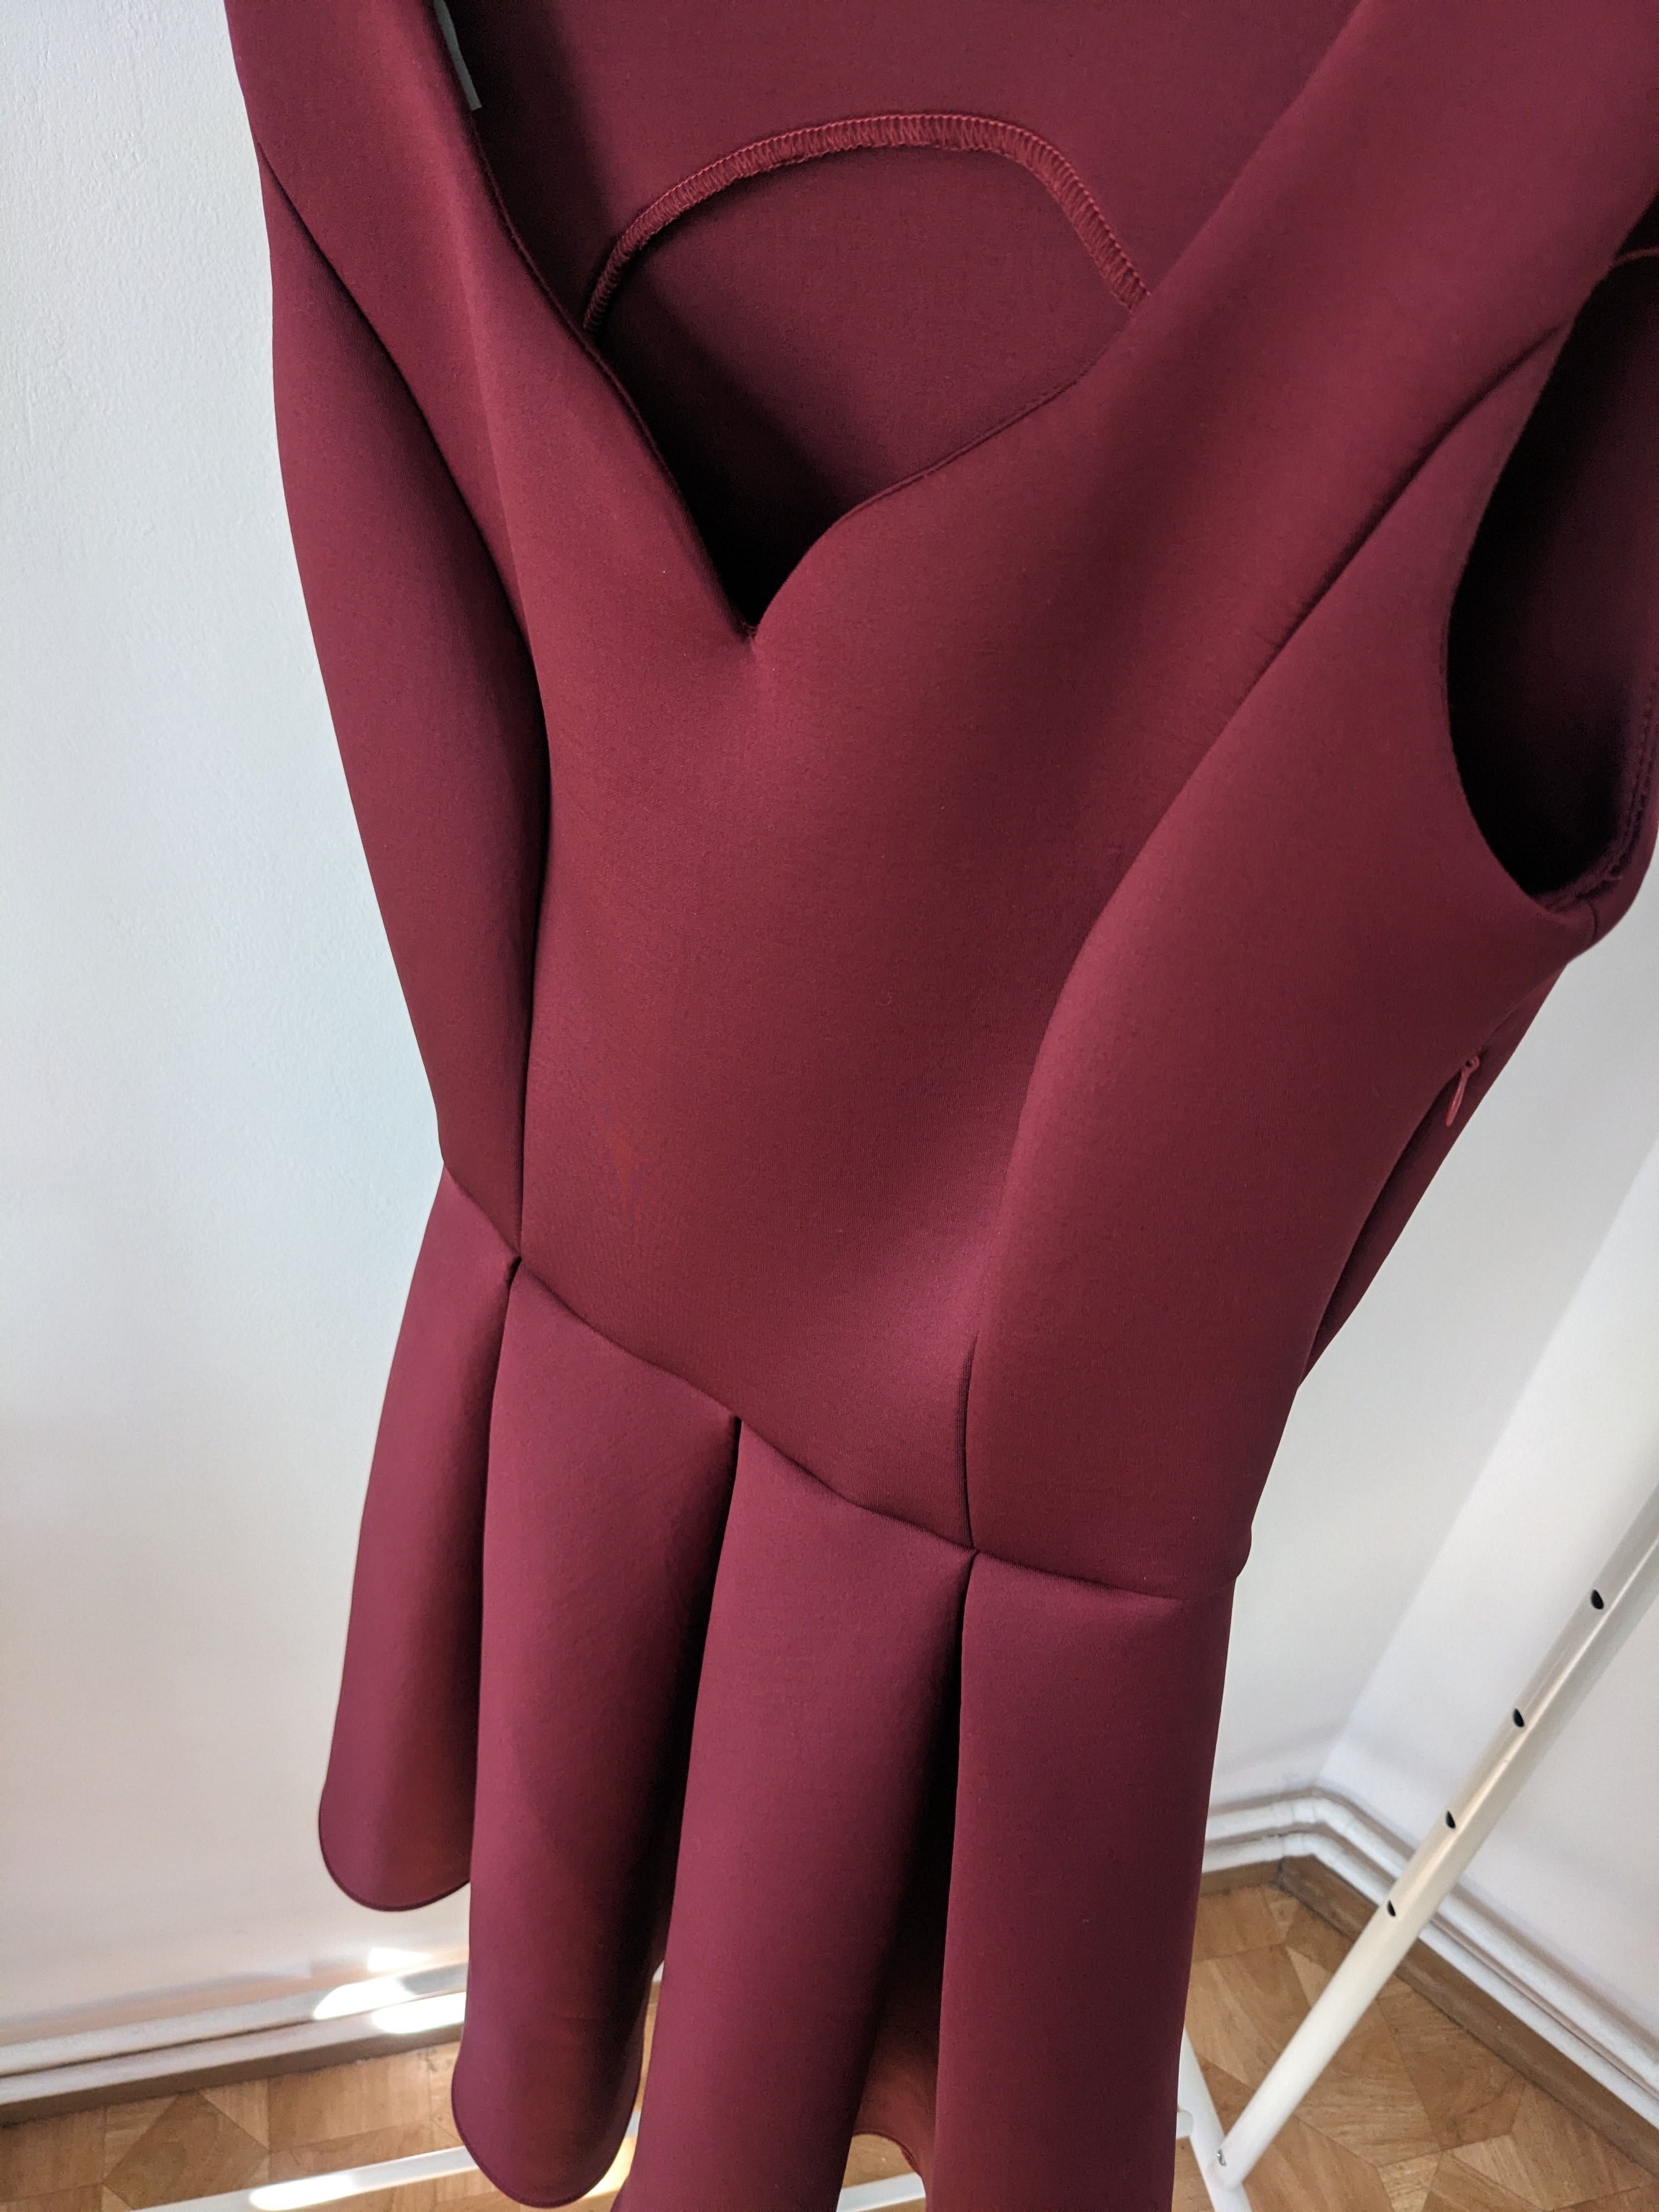 VUBU NOWA elegancka bordowa czerwona rozkloszowana sukienka S 36